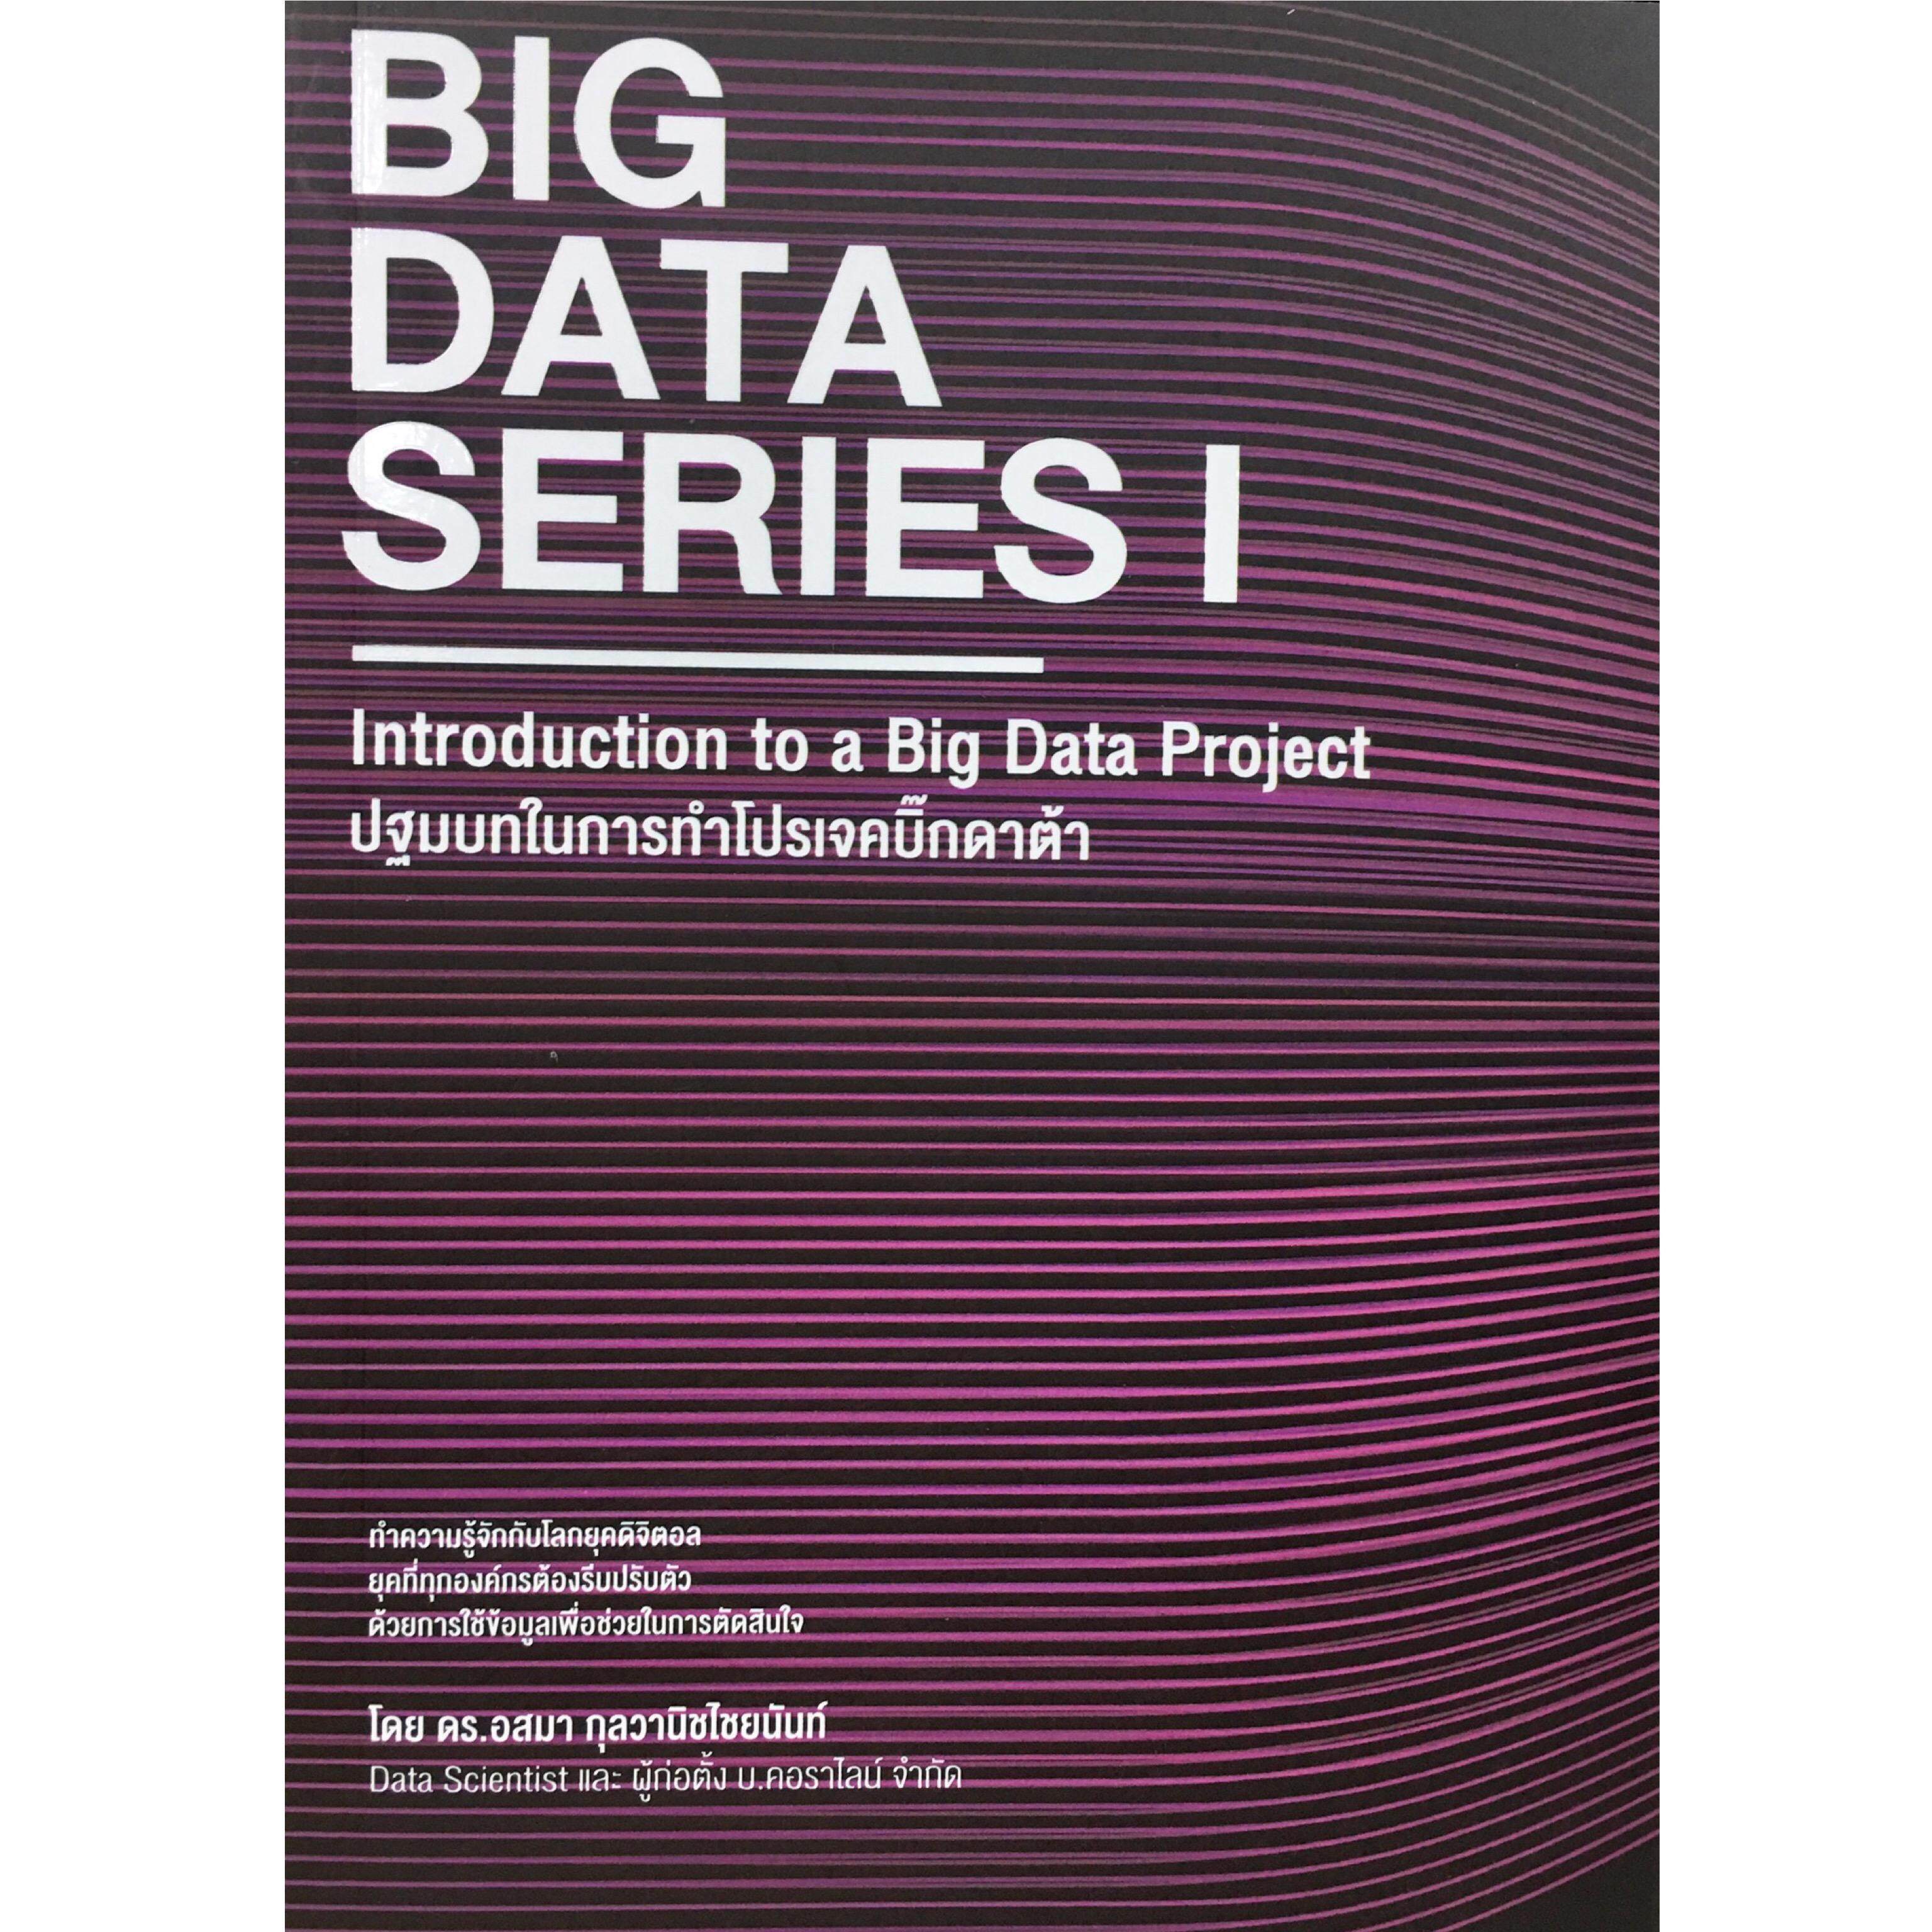 BIG DATA SERIES I : Introduction to a Big Data Project ปฐมบทในการทำโปรเจคบิ๊กดาต้า